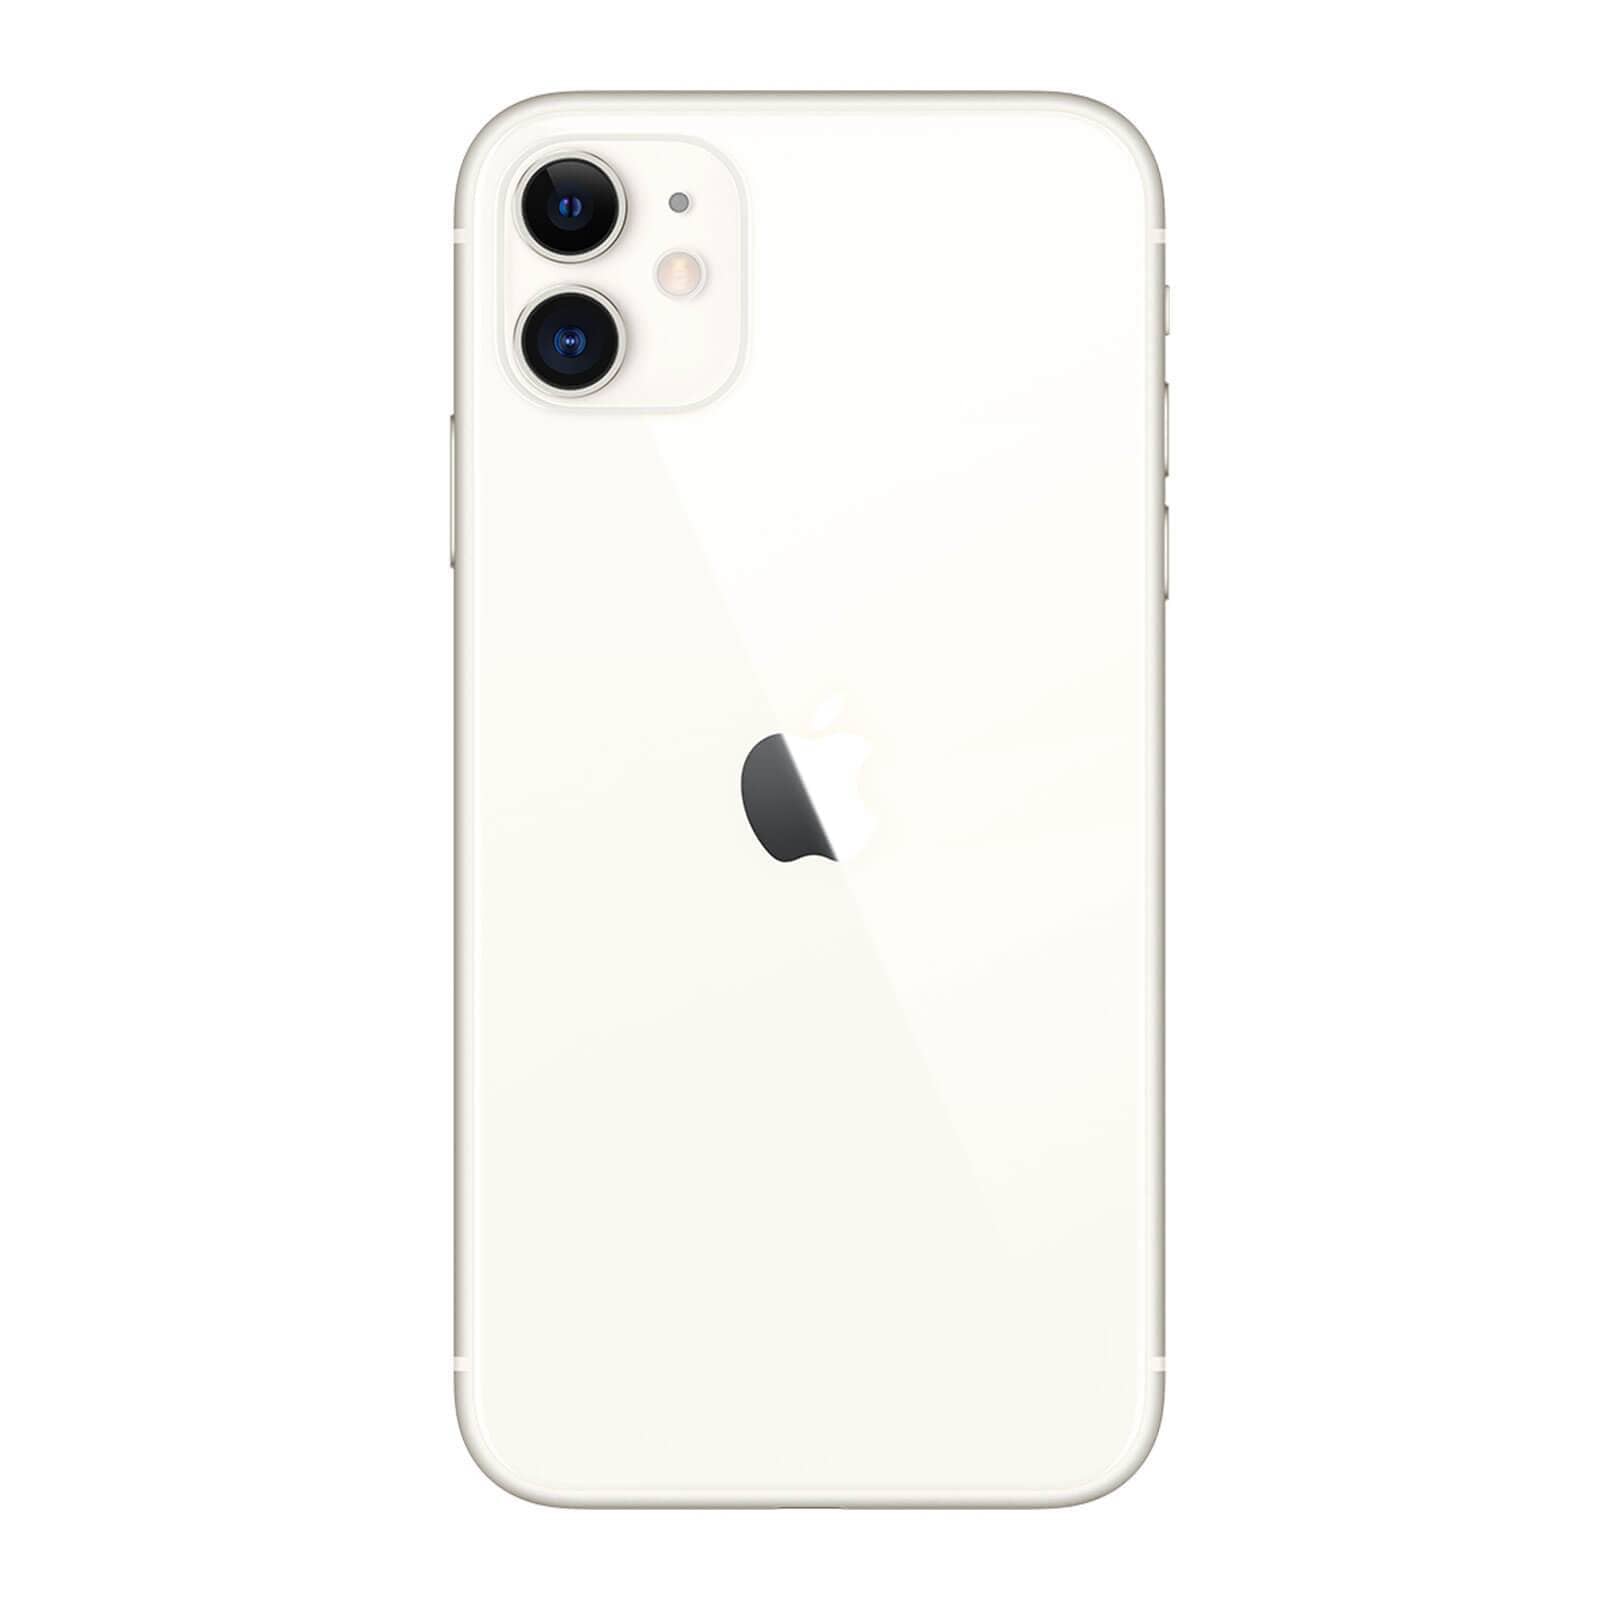 Apple iPhone 11 128GB White Very Good - Unlocked